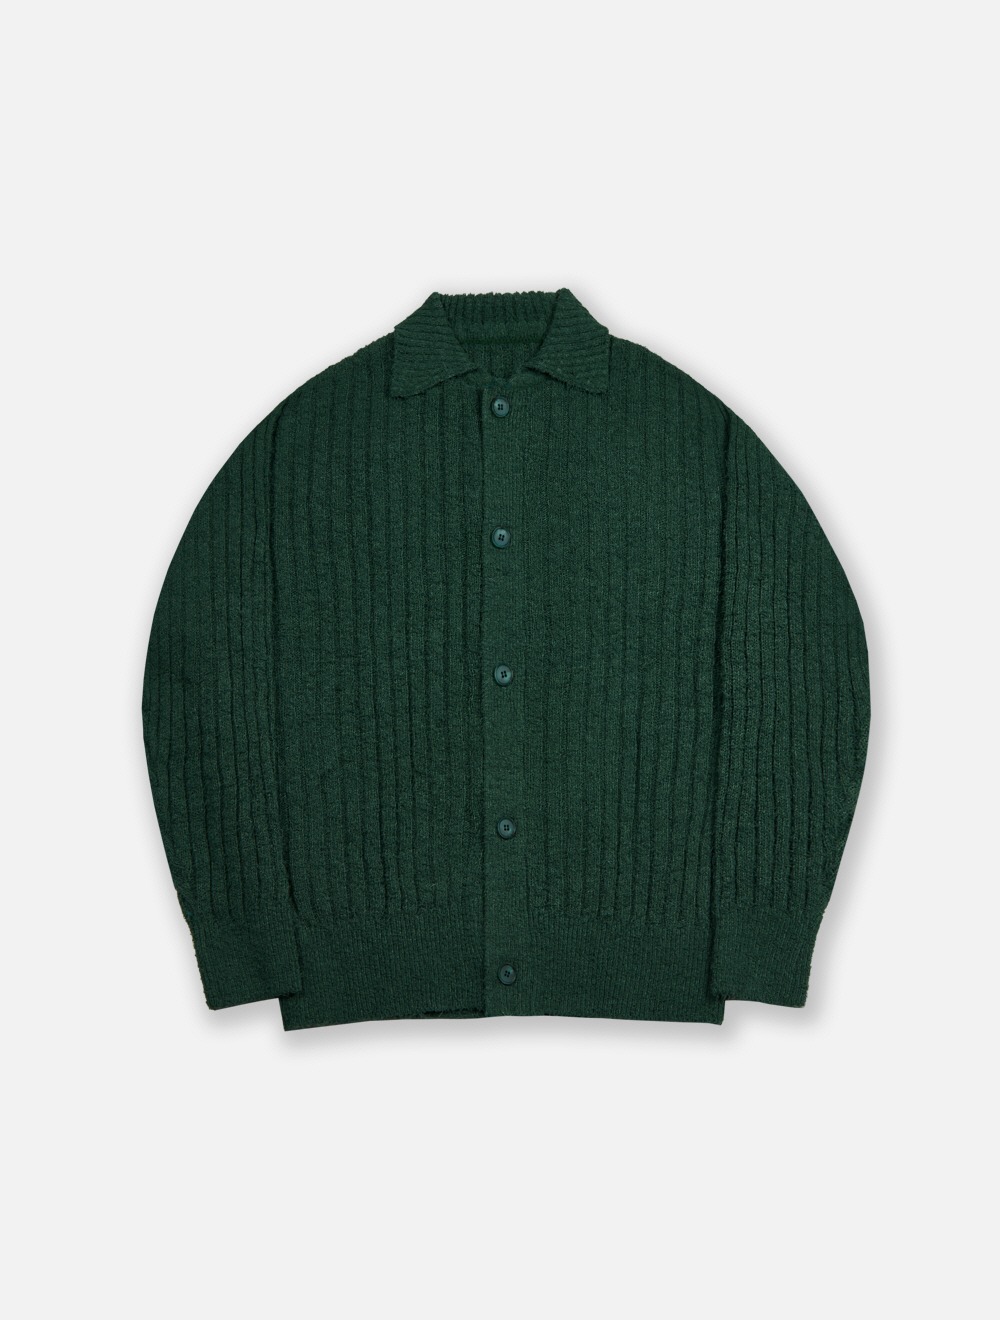 tail yarn collar cardigan_moss green